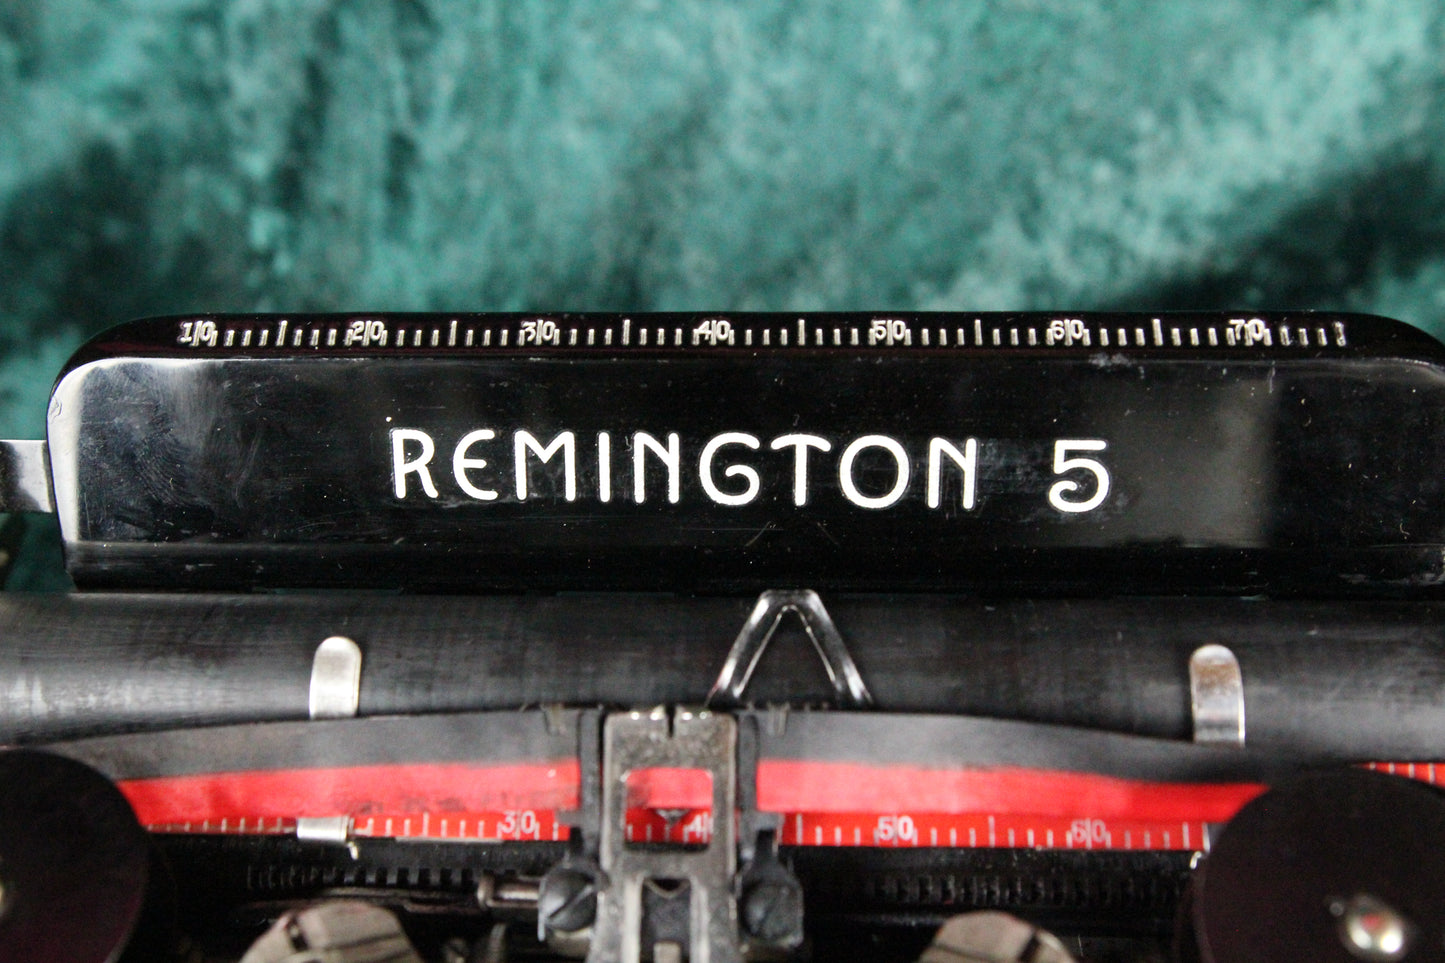 Remington Model 5 Streamline Portable Manual Typewriter with Case, 1935